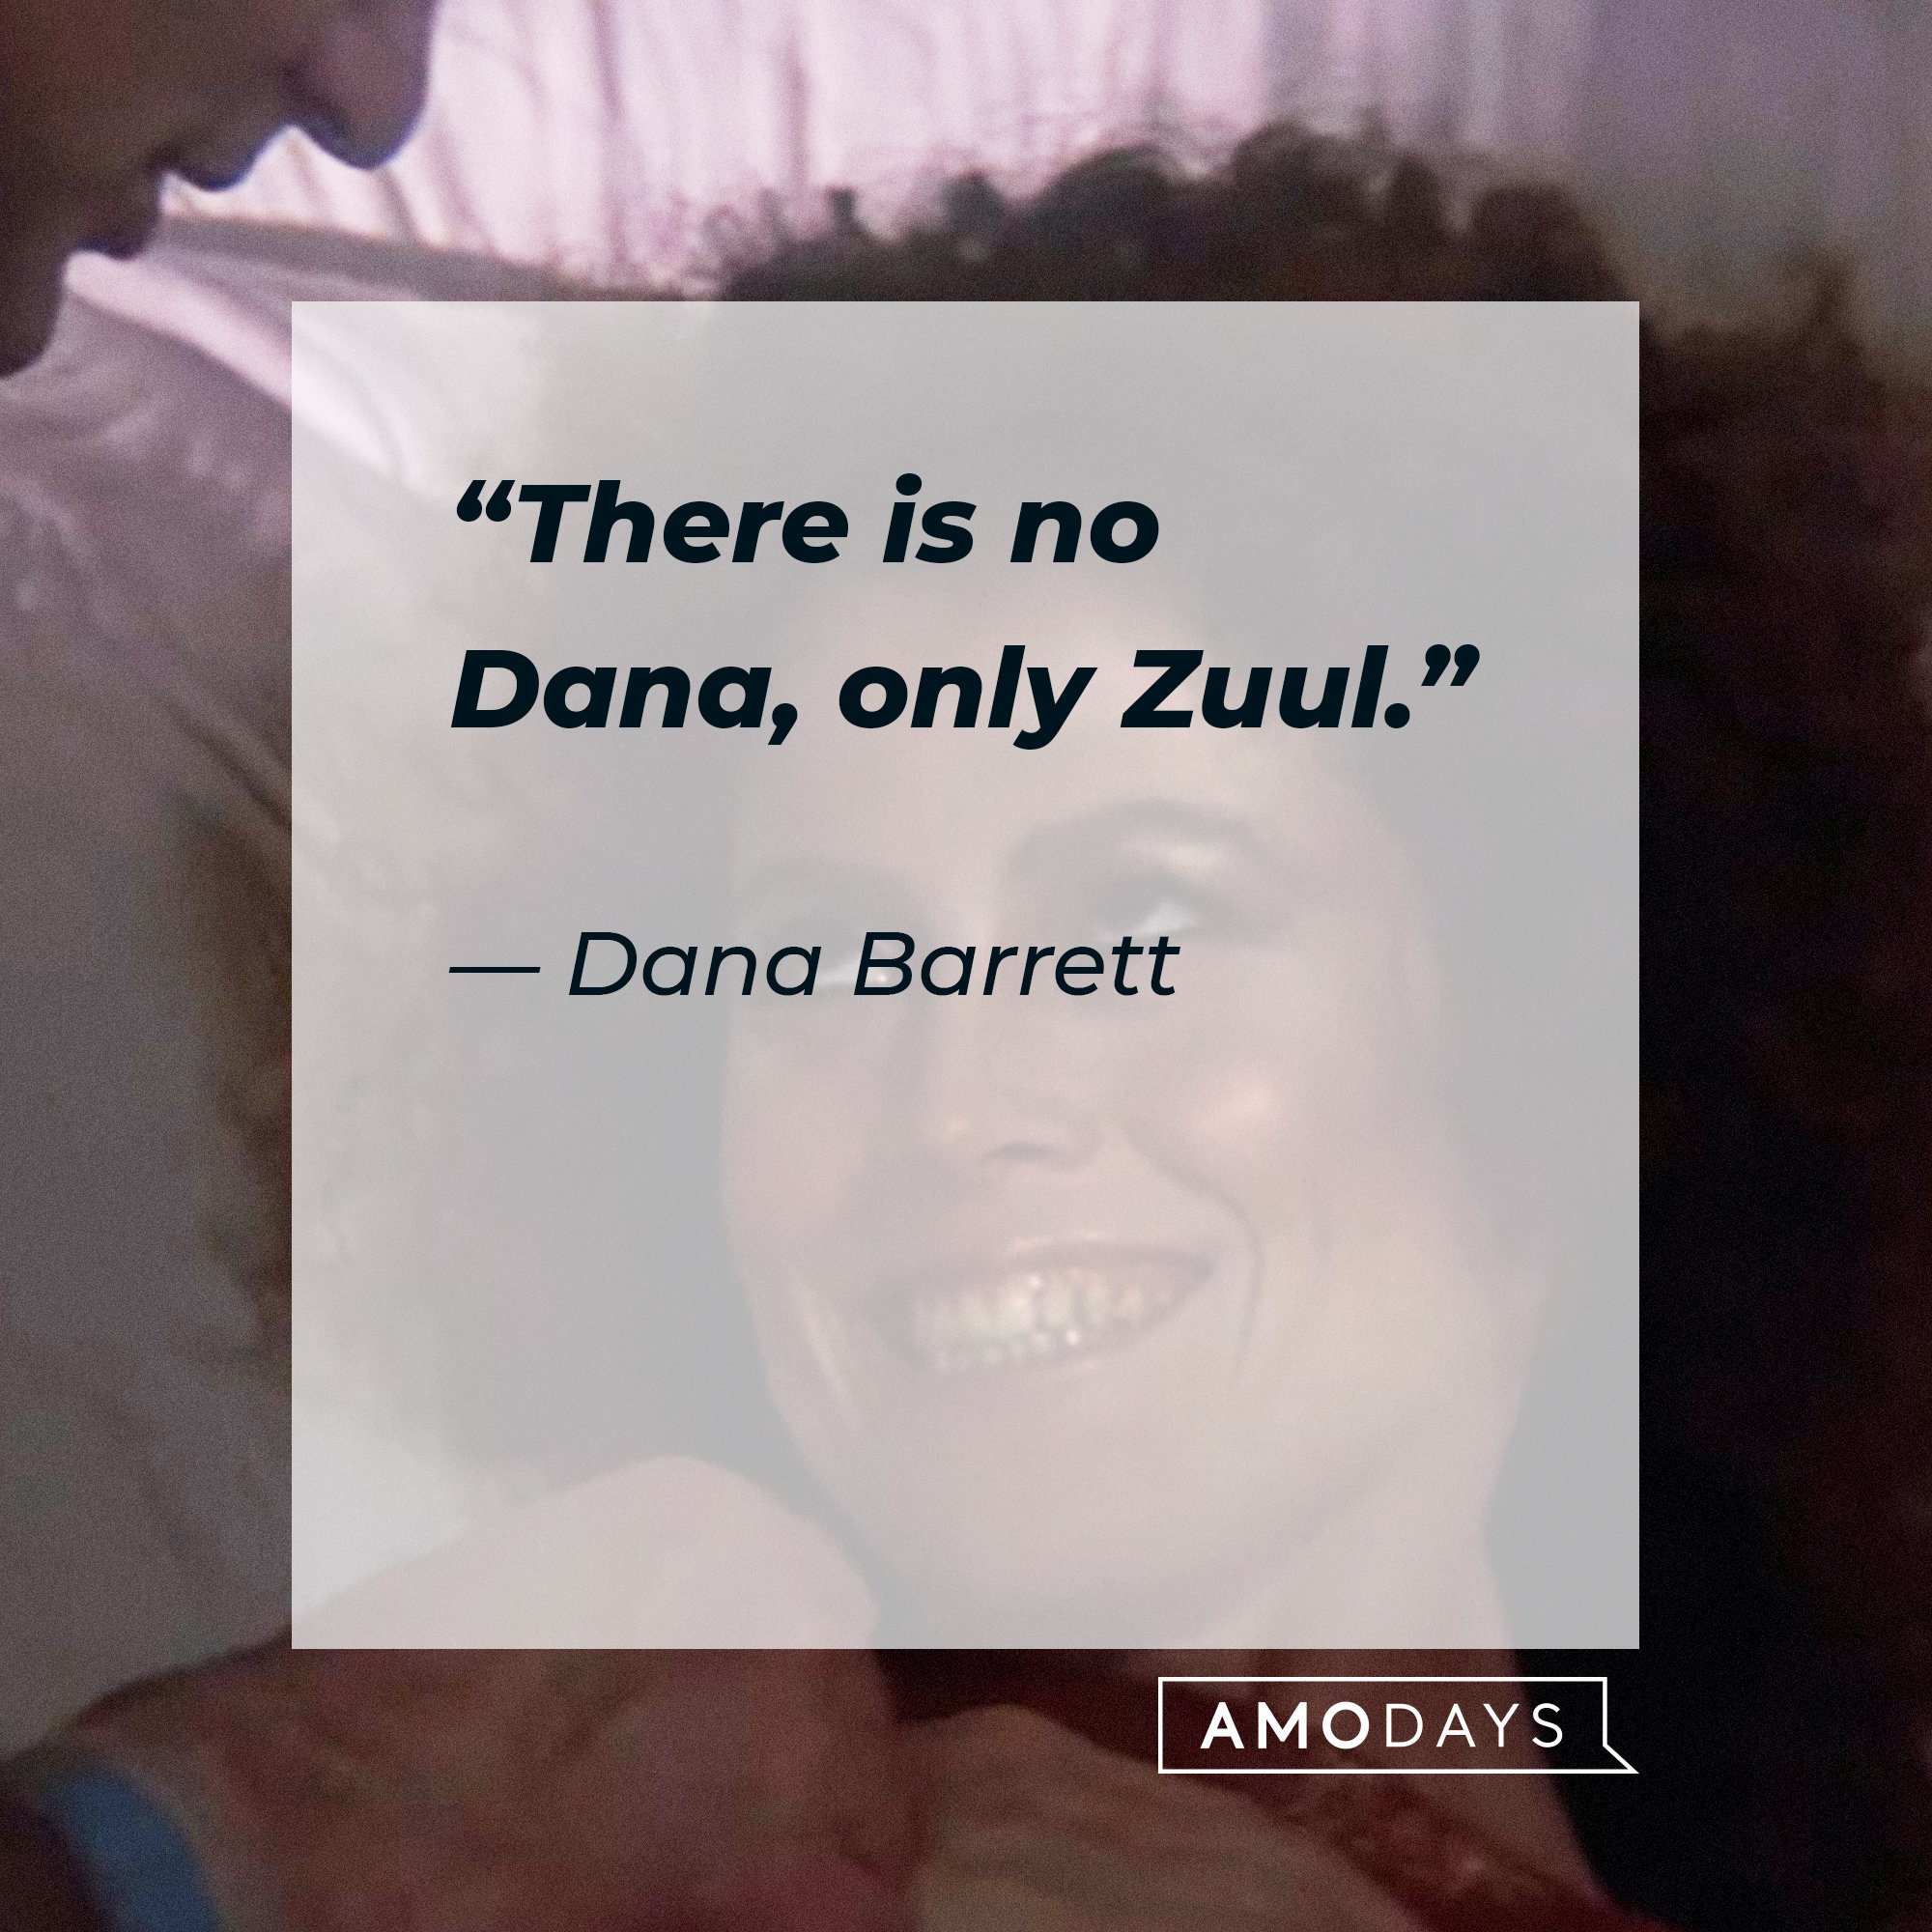 Dana Barrett's quote: “There is no Dana, only Zuul.” | Image: AmoDays